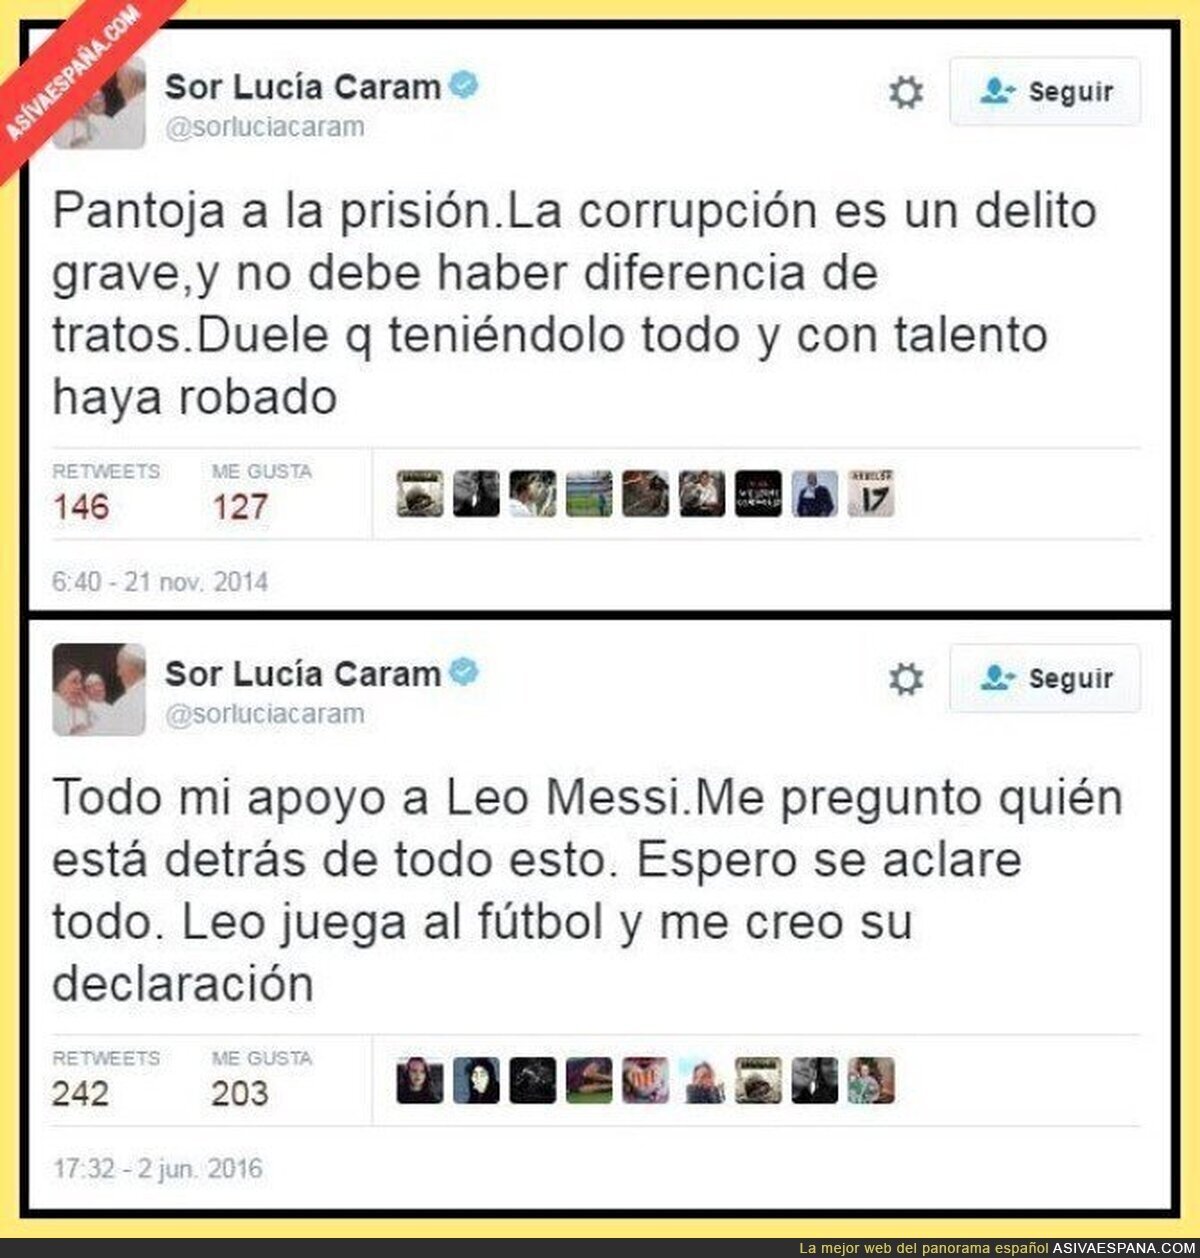 Bravo, Sor Lucía Caram